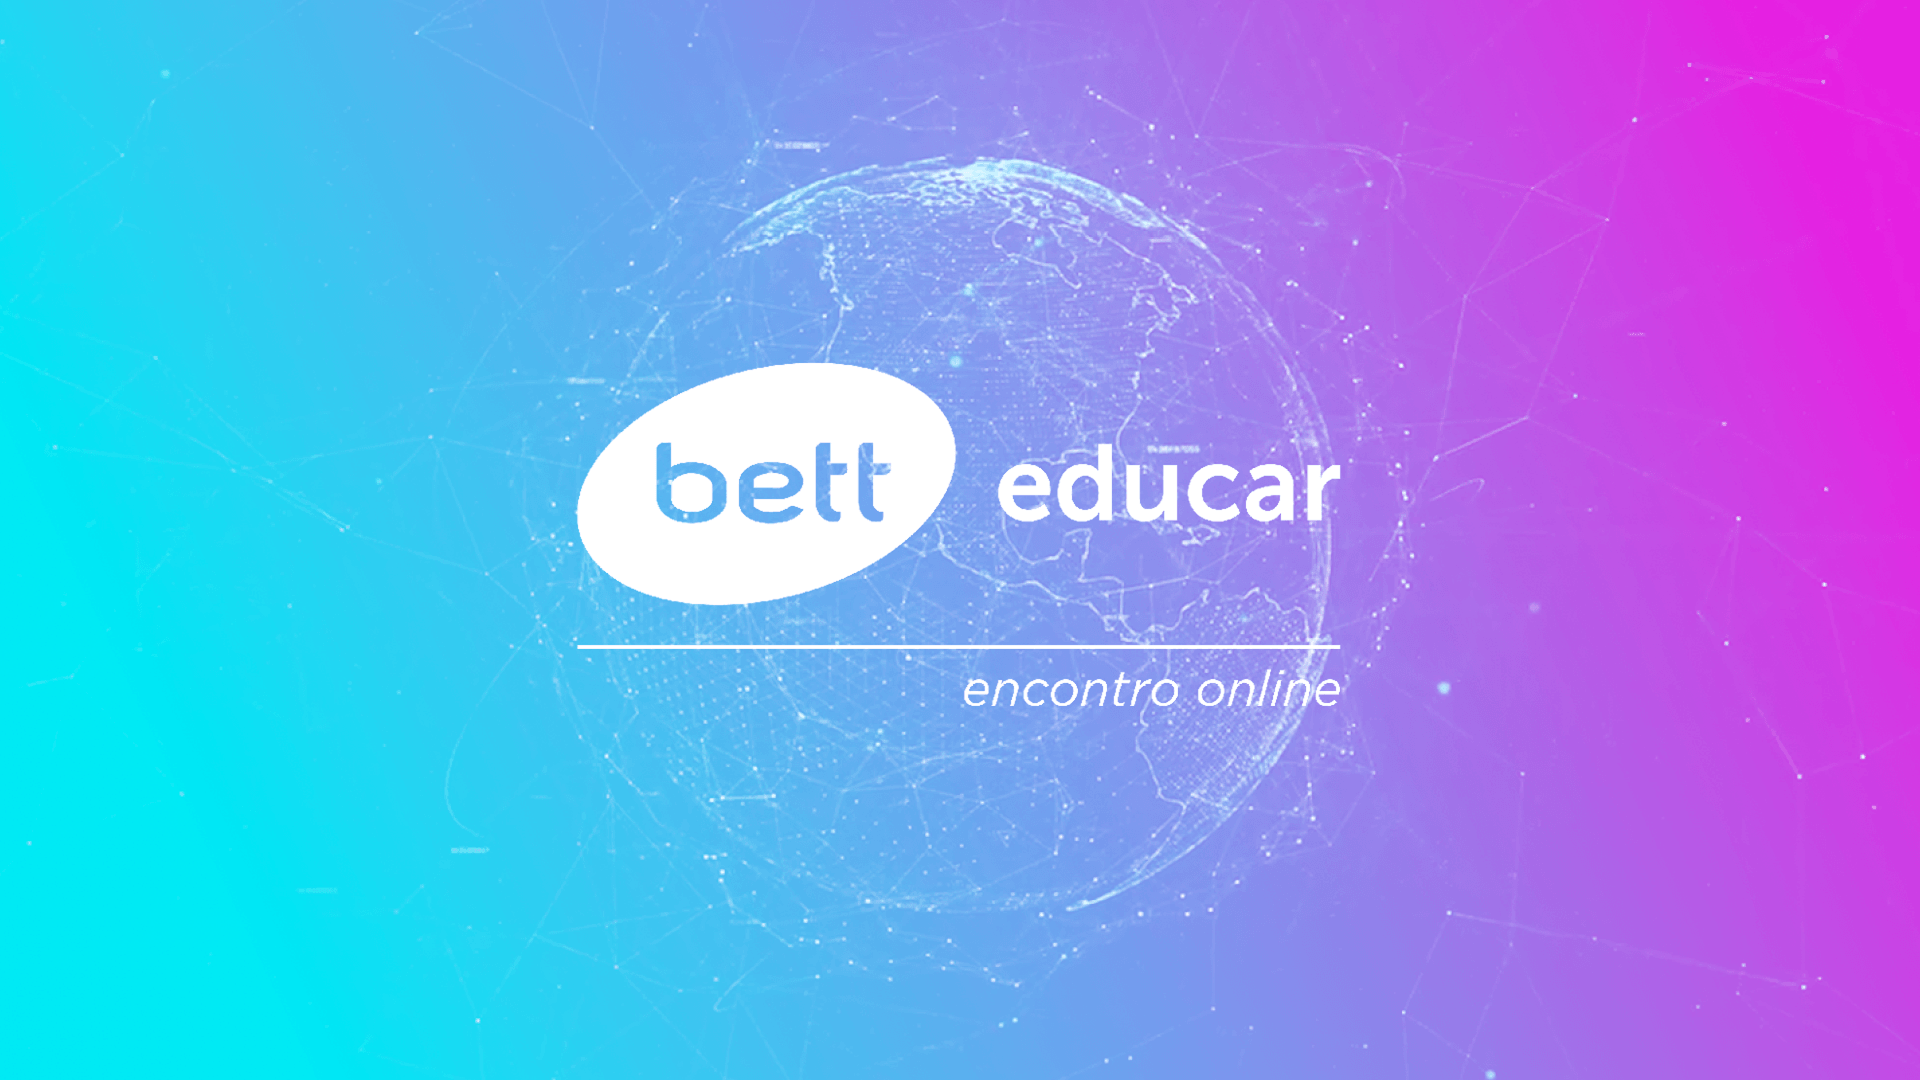 Bett Educar realiza encontro online e supera expectativas